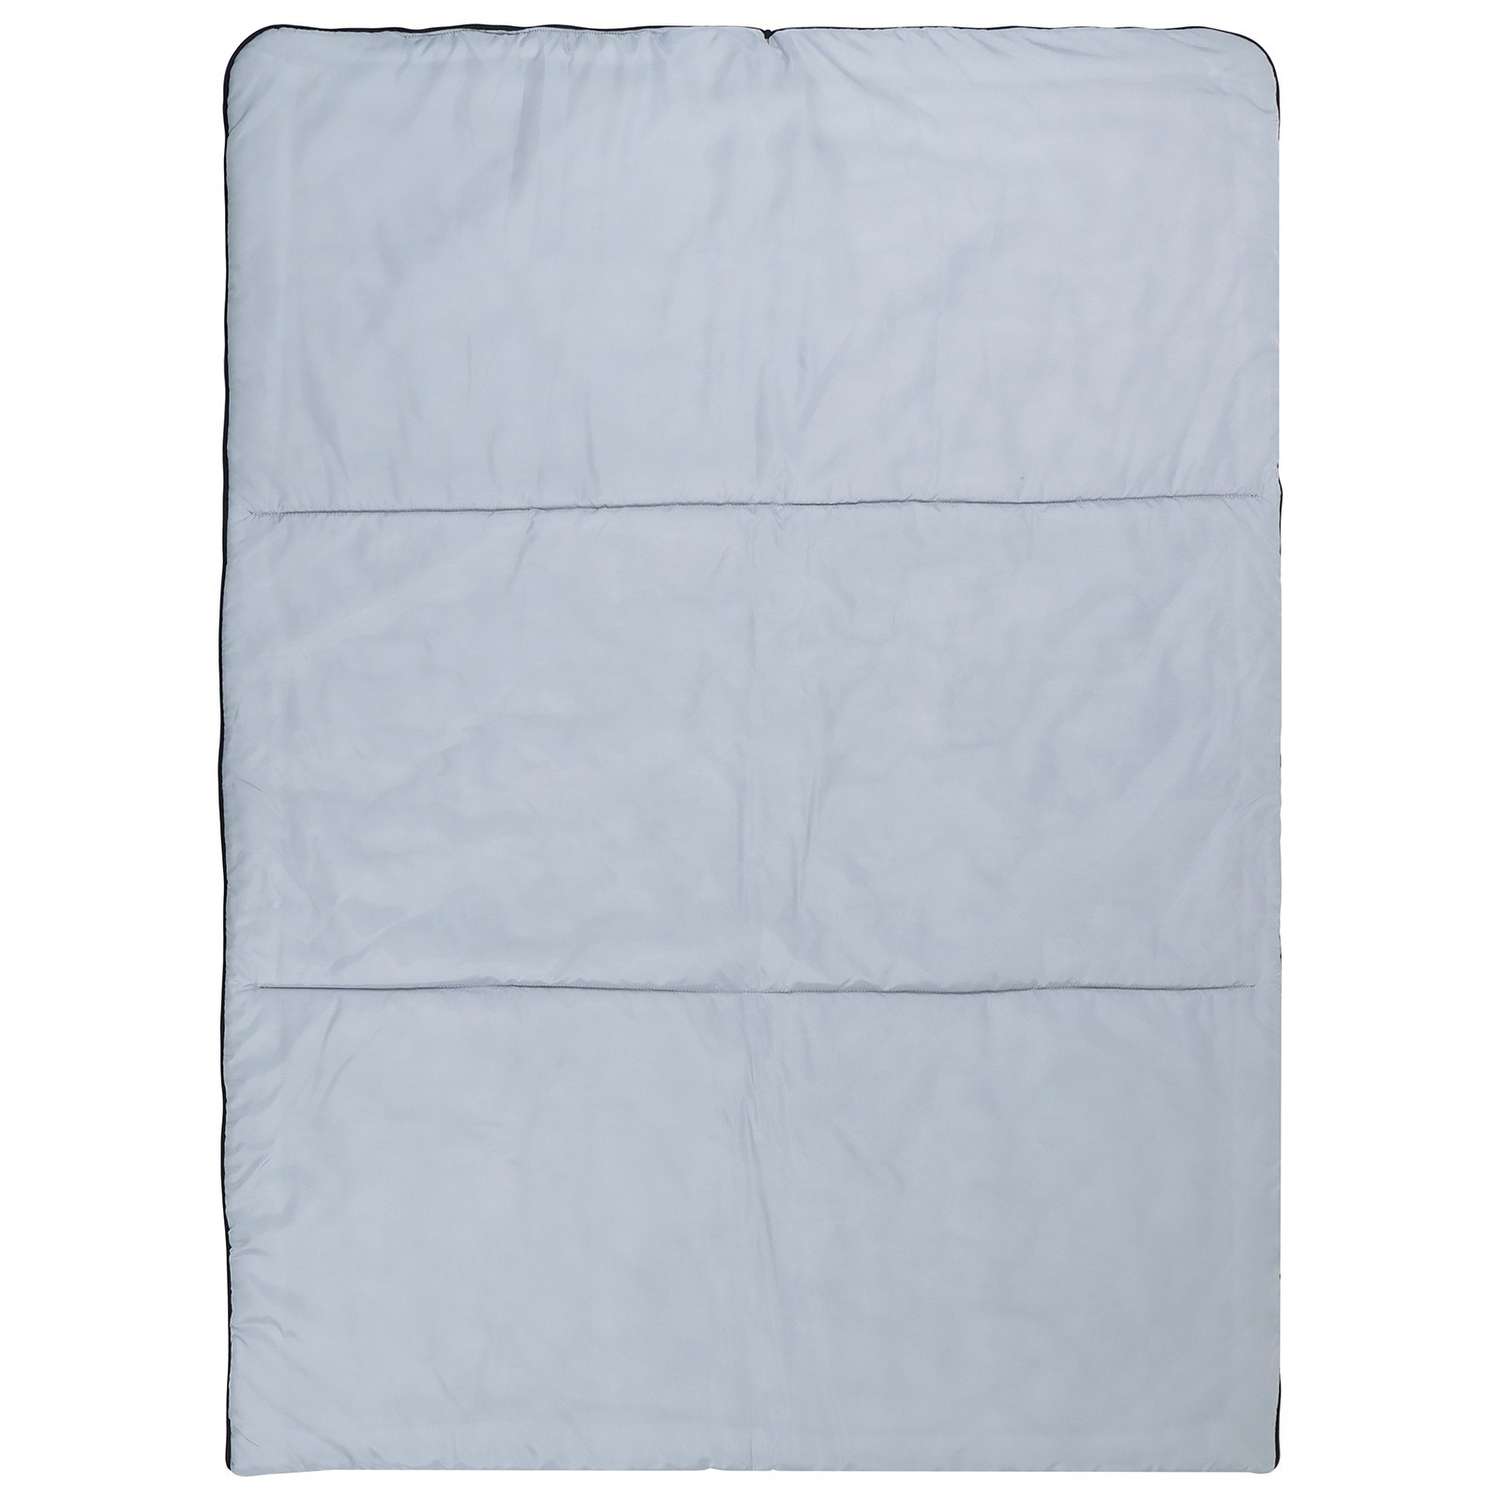 Спальник-одеяло Maclay 200 х 75 см до -5 °С - фото 4